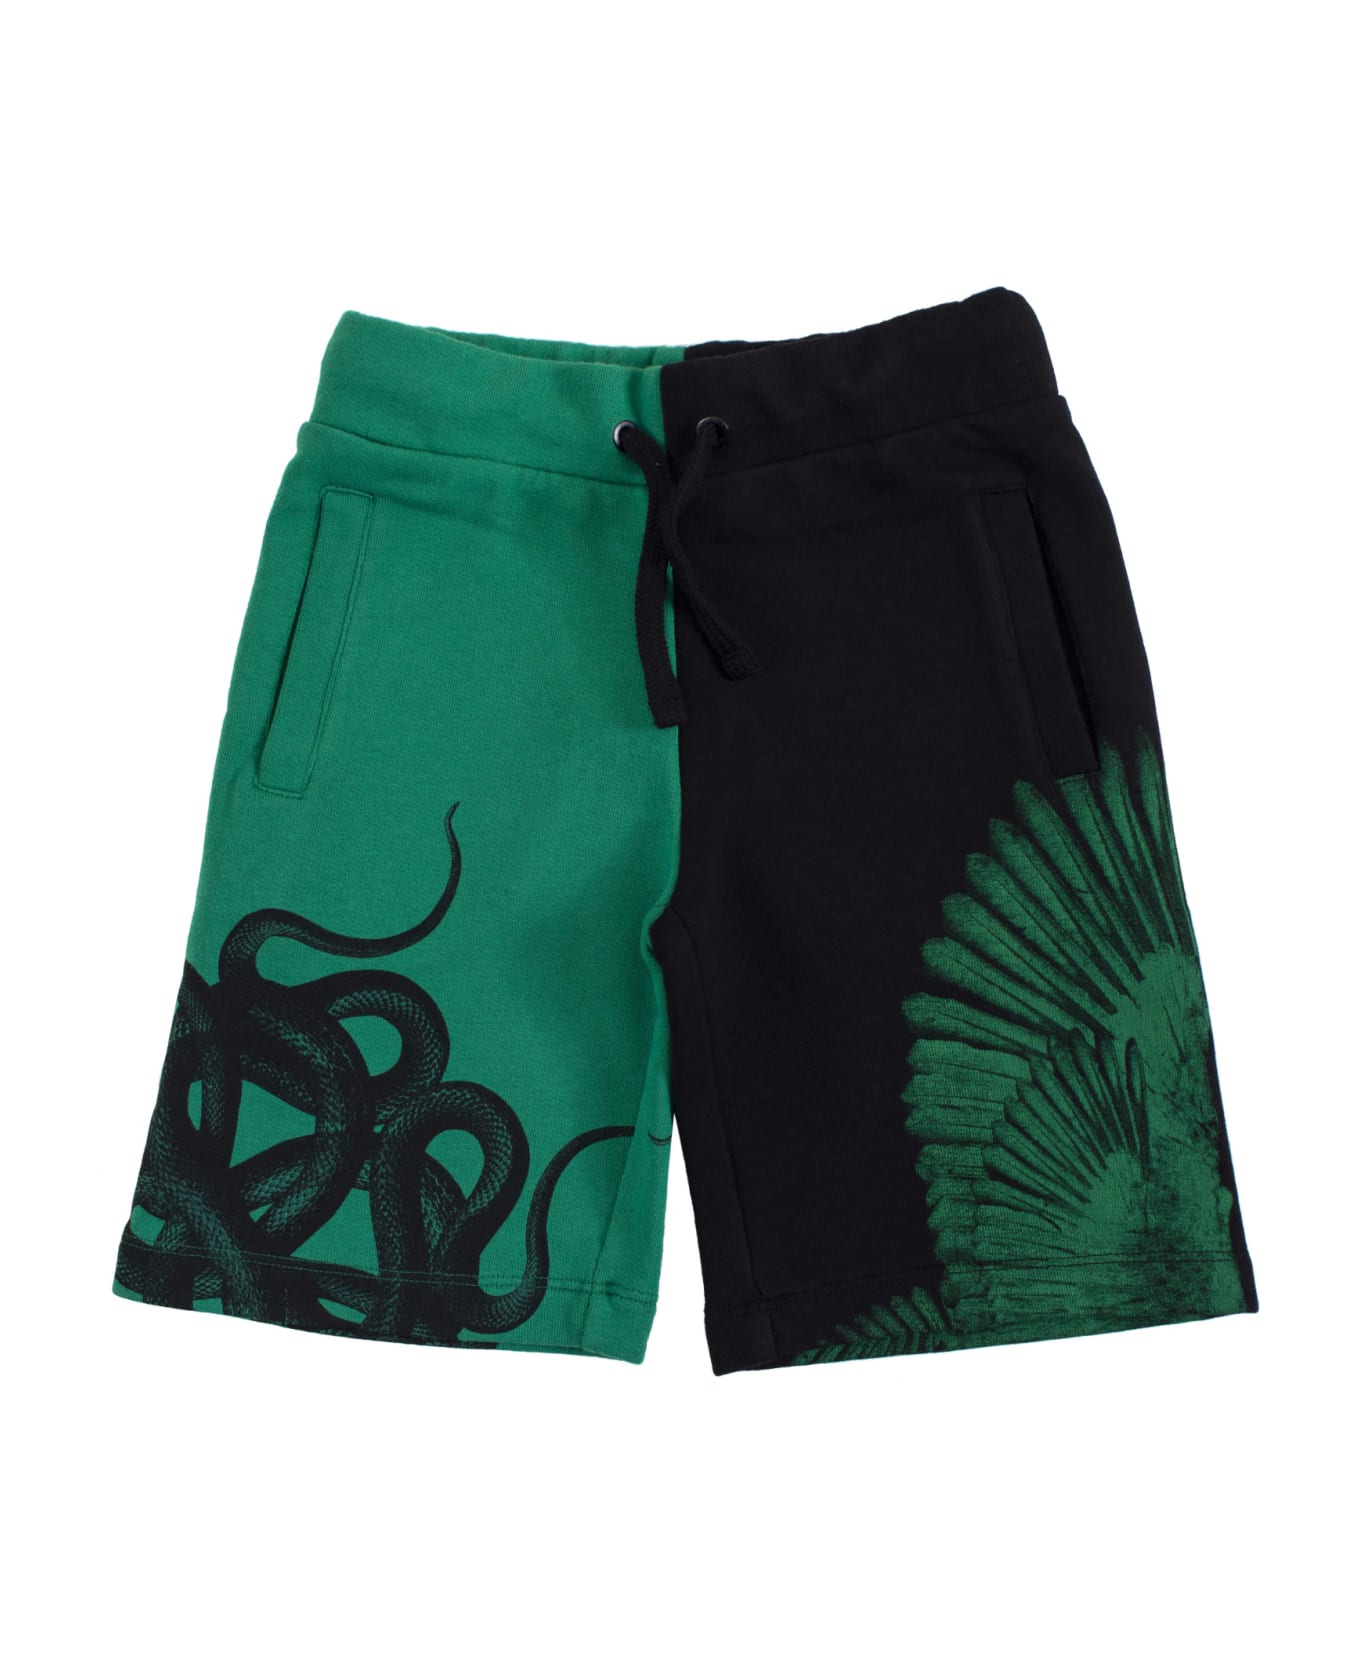 Marcelo Burlon Printed Shorts - Black/Green